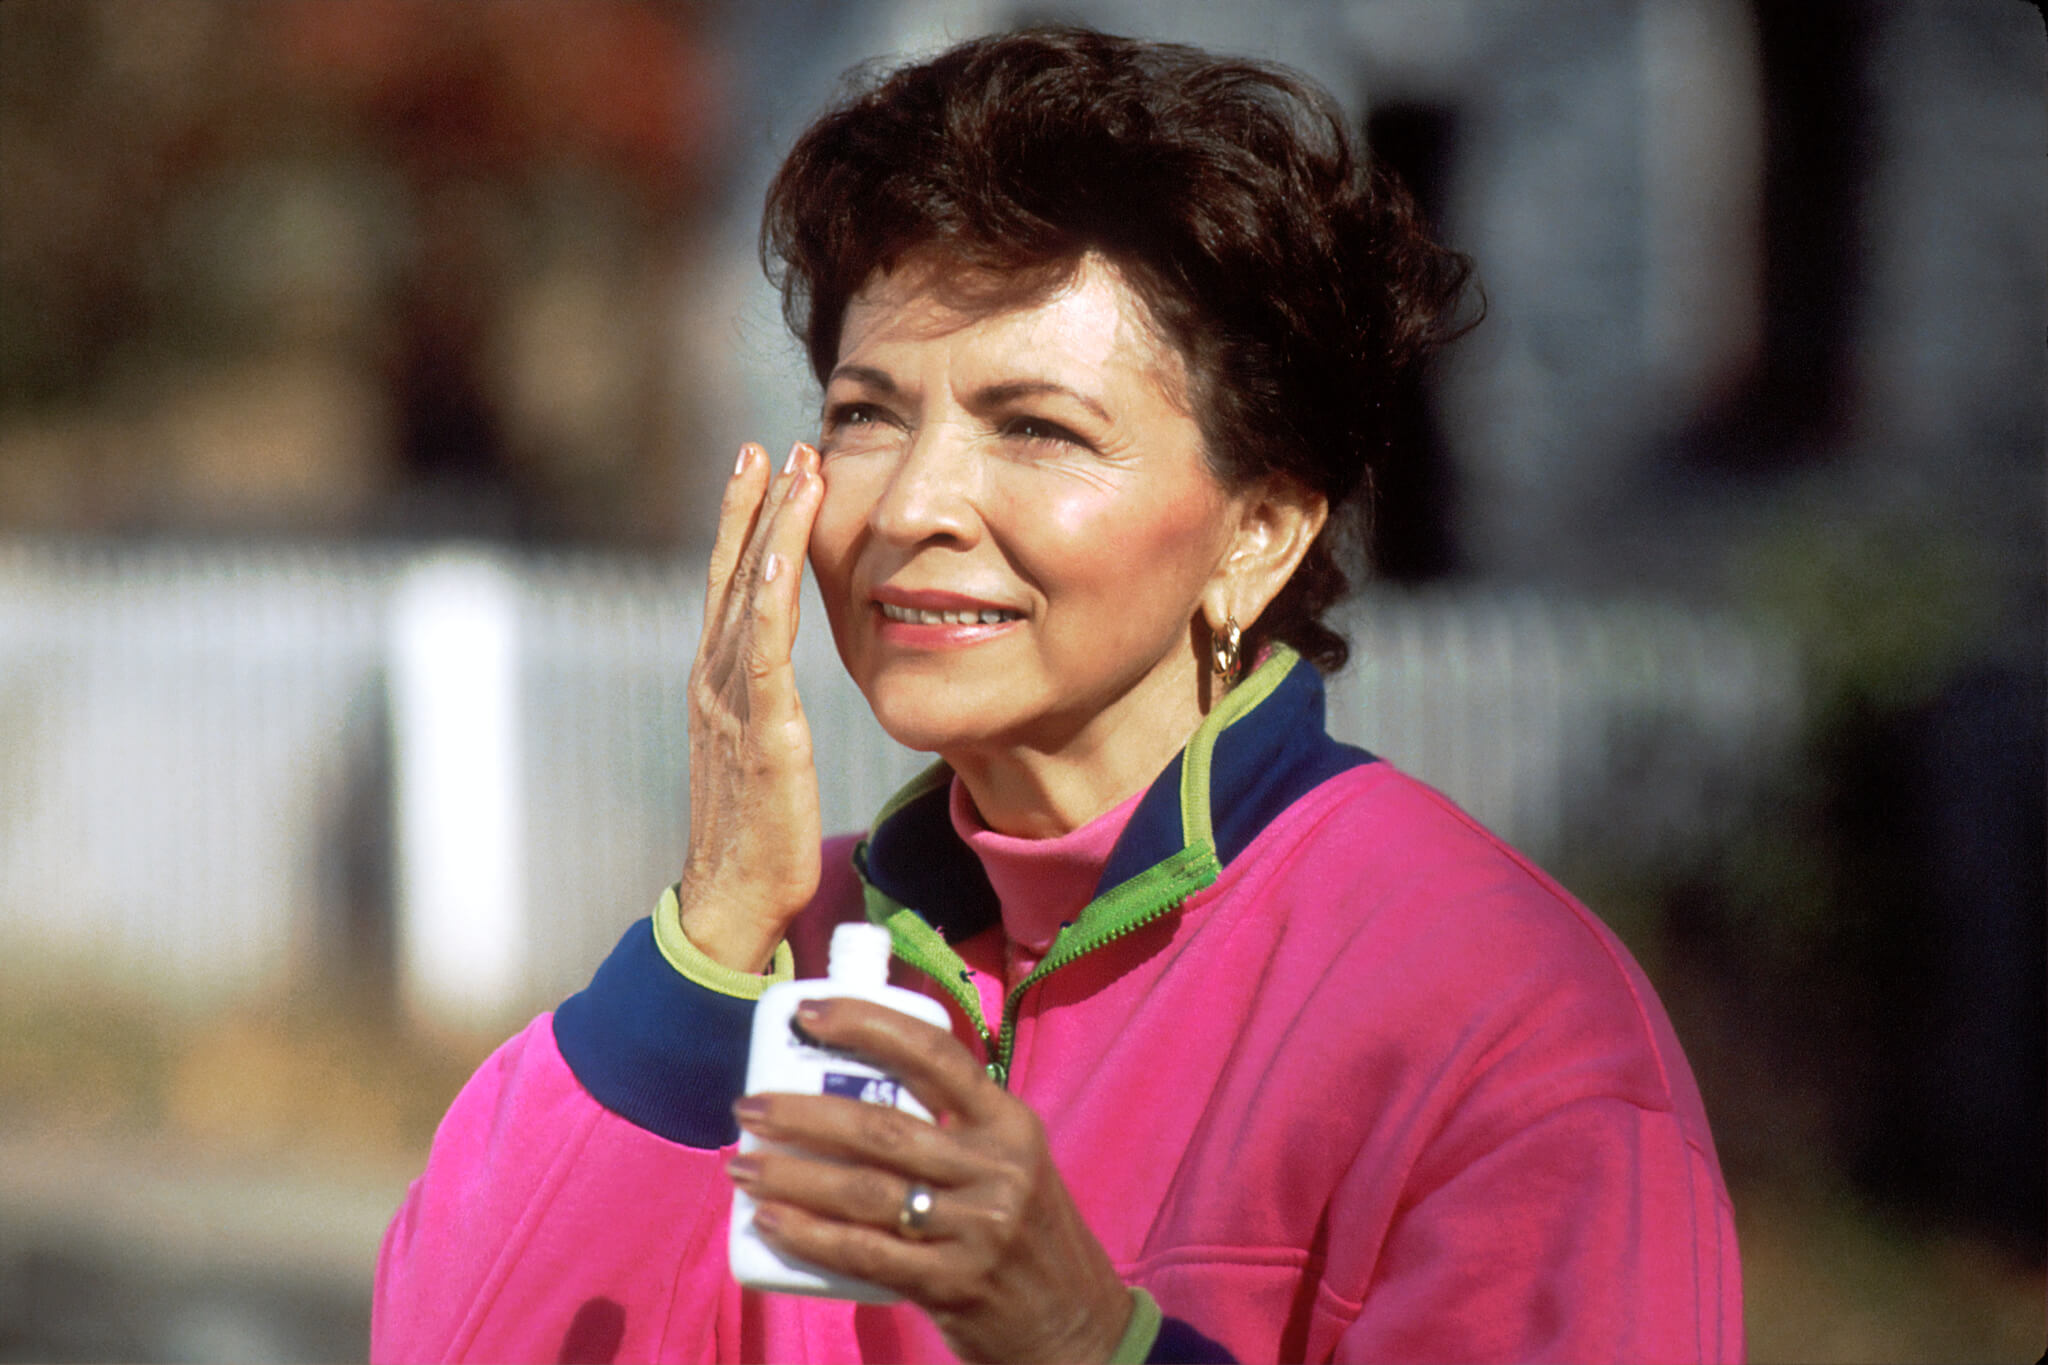 A woman applying tinted sunscreen